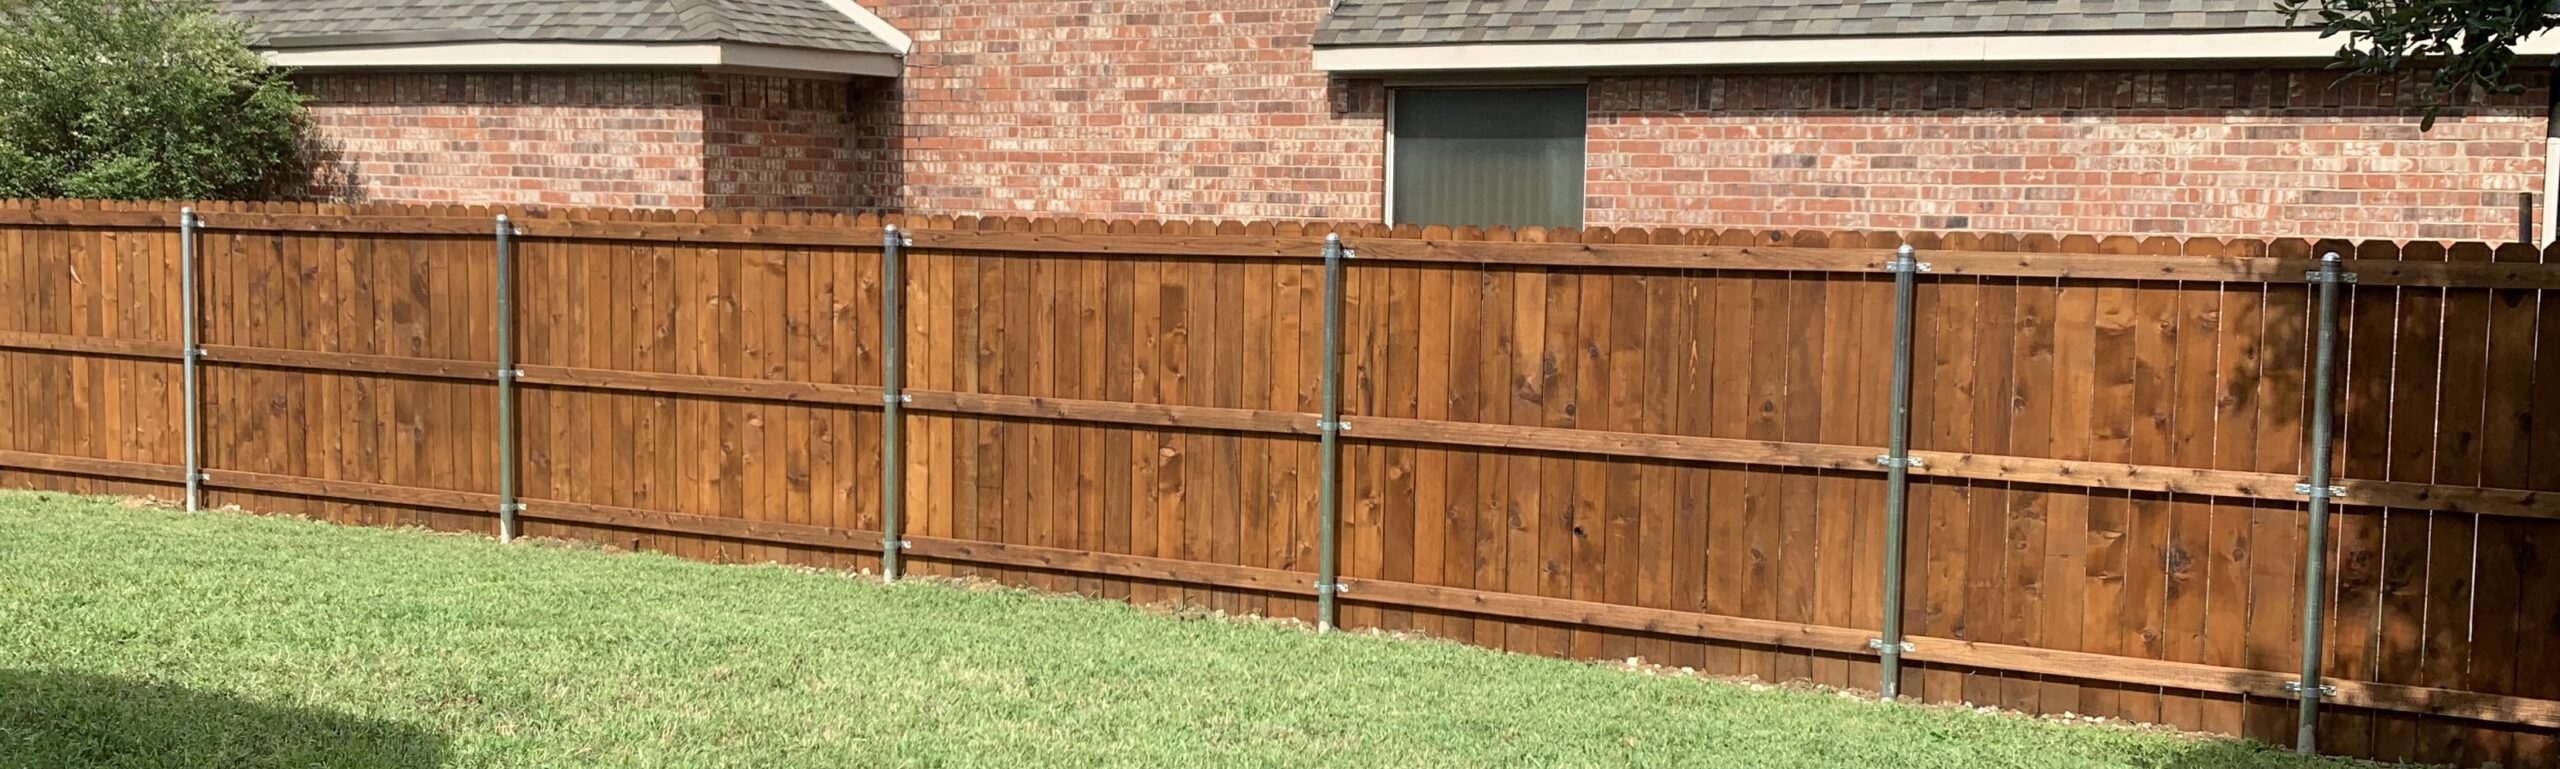 Fencing Installation, Replacement & Repair in Dallas, Texas